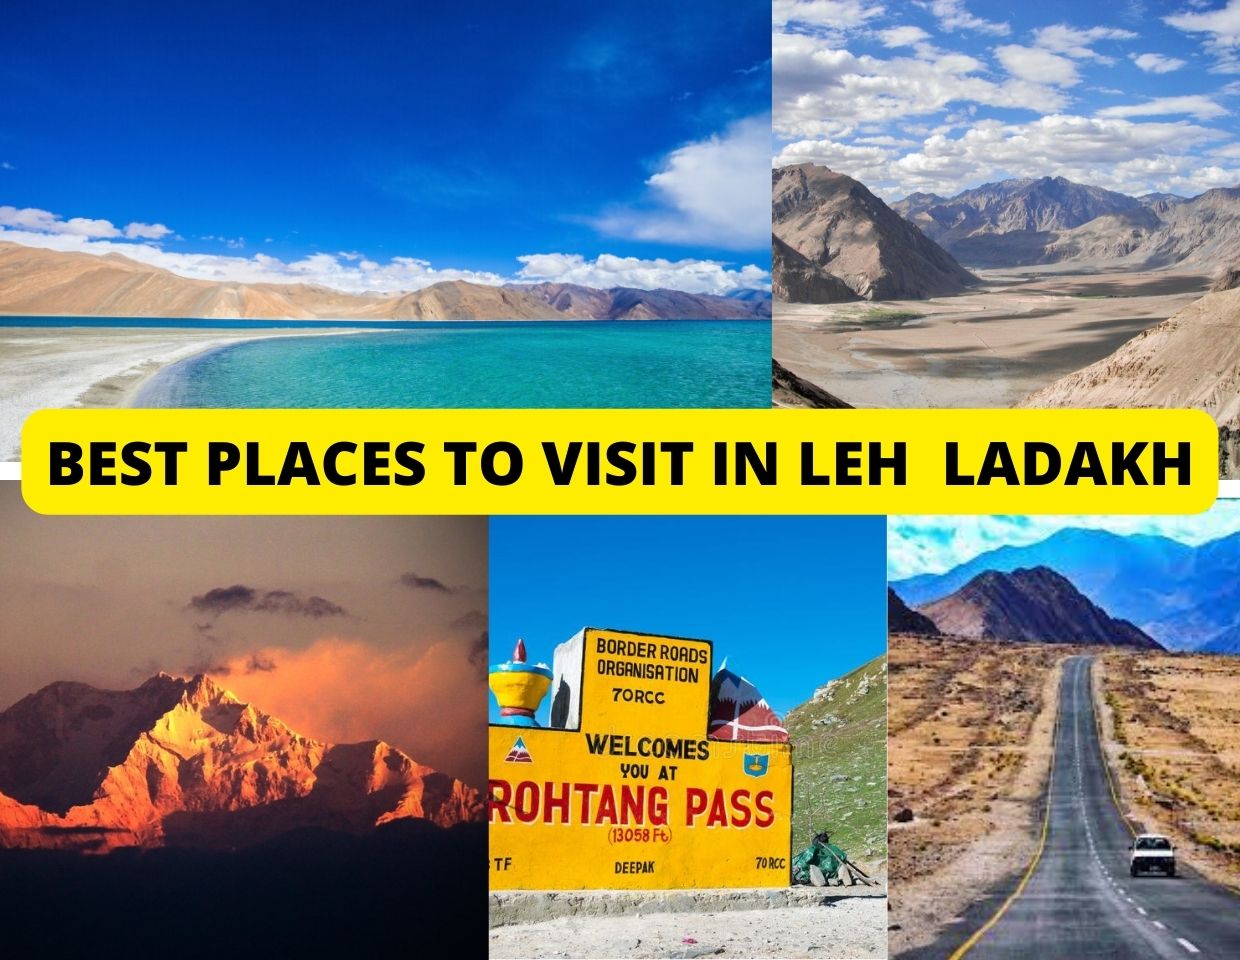 BEST PLACES TO VISIT IN LEH LADAKH